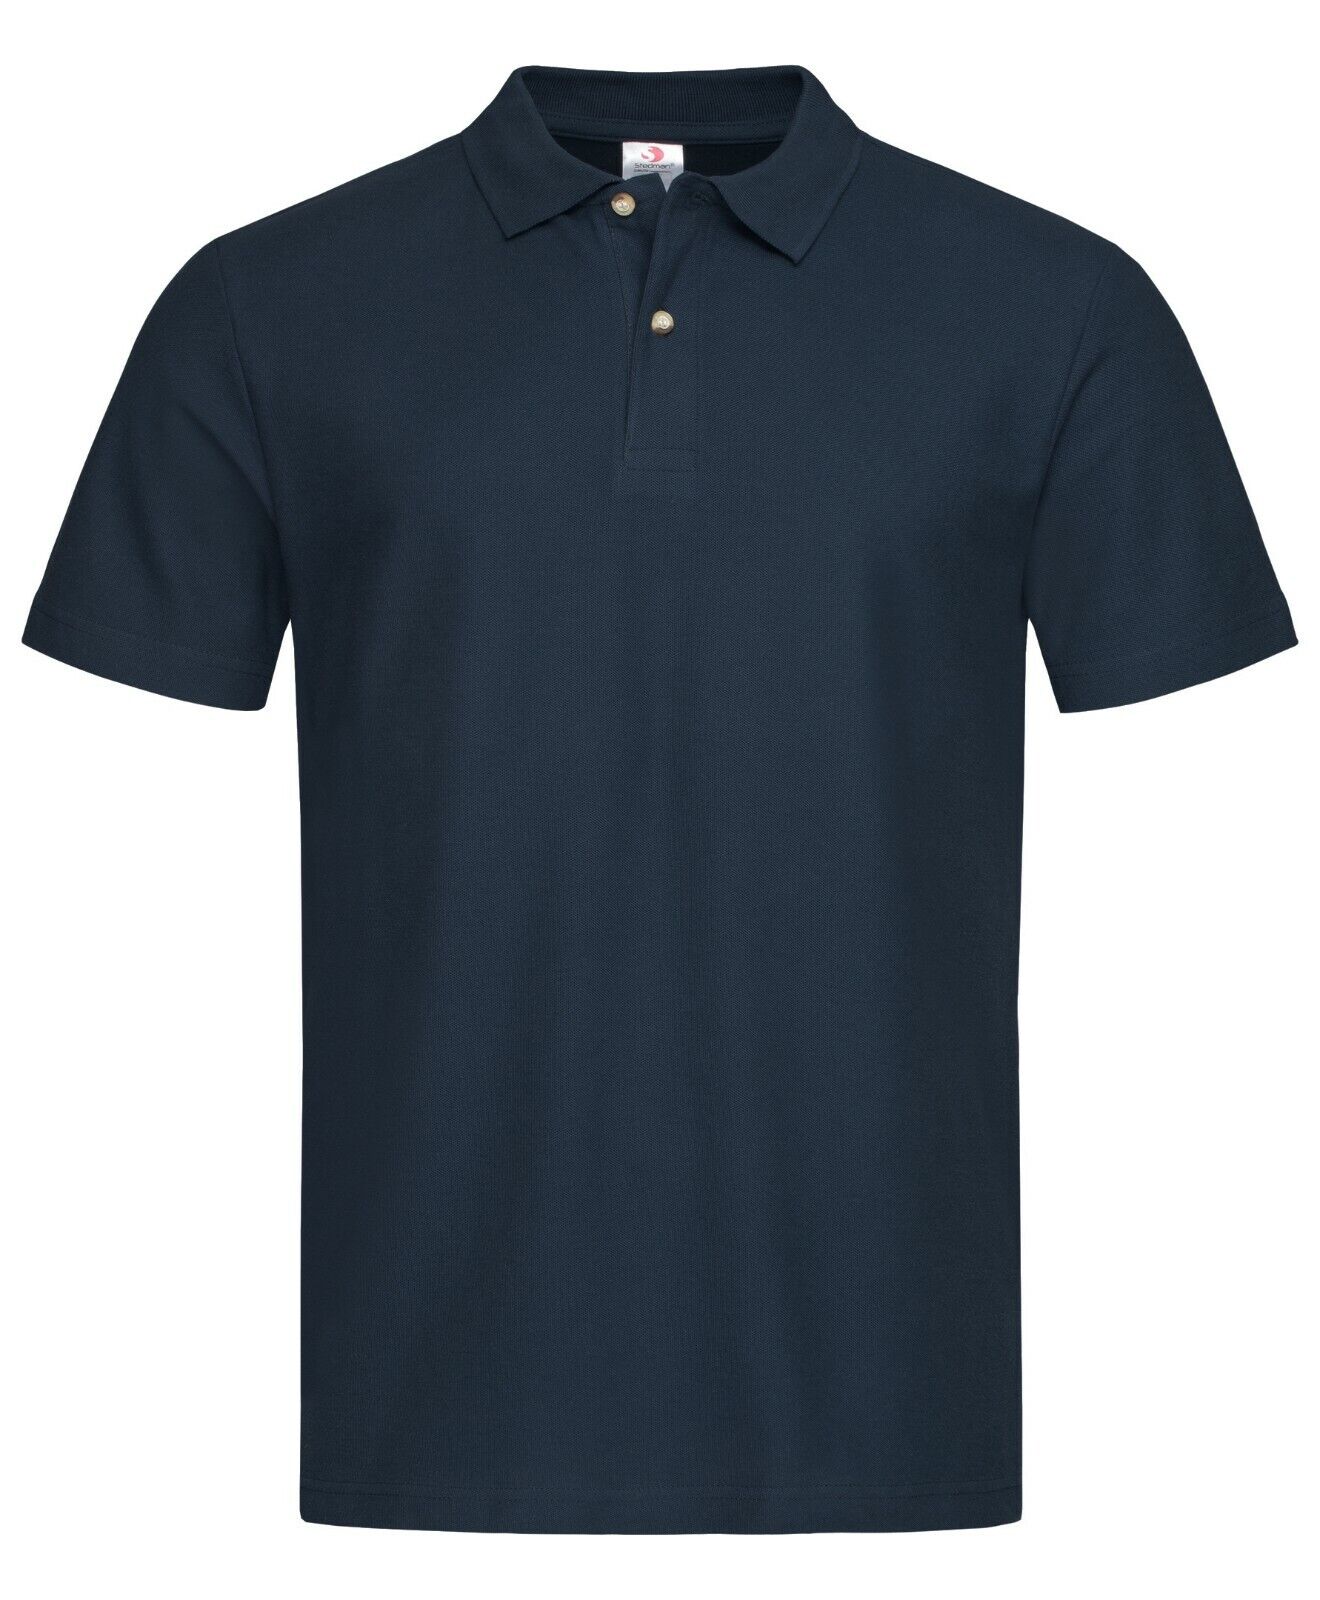 Mens Cotton Solid Pique Polo Golf Sports Shirt No Logo T-shirt with neck